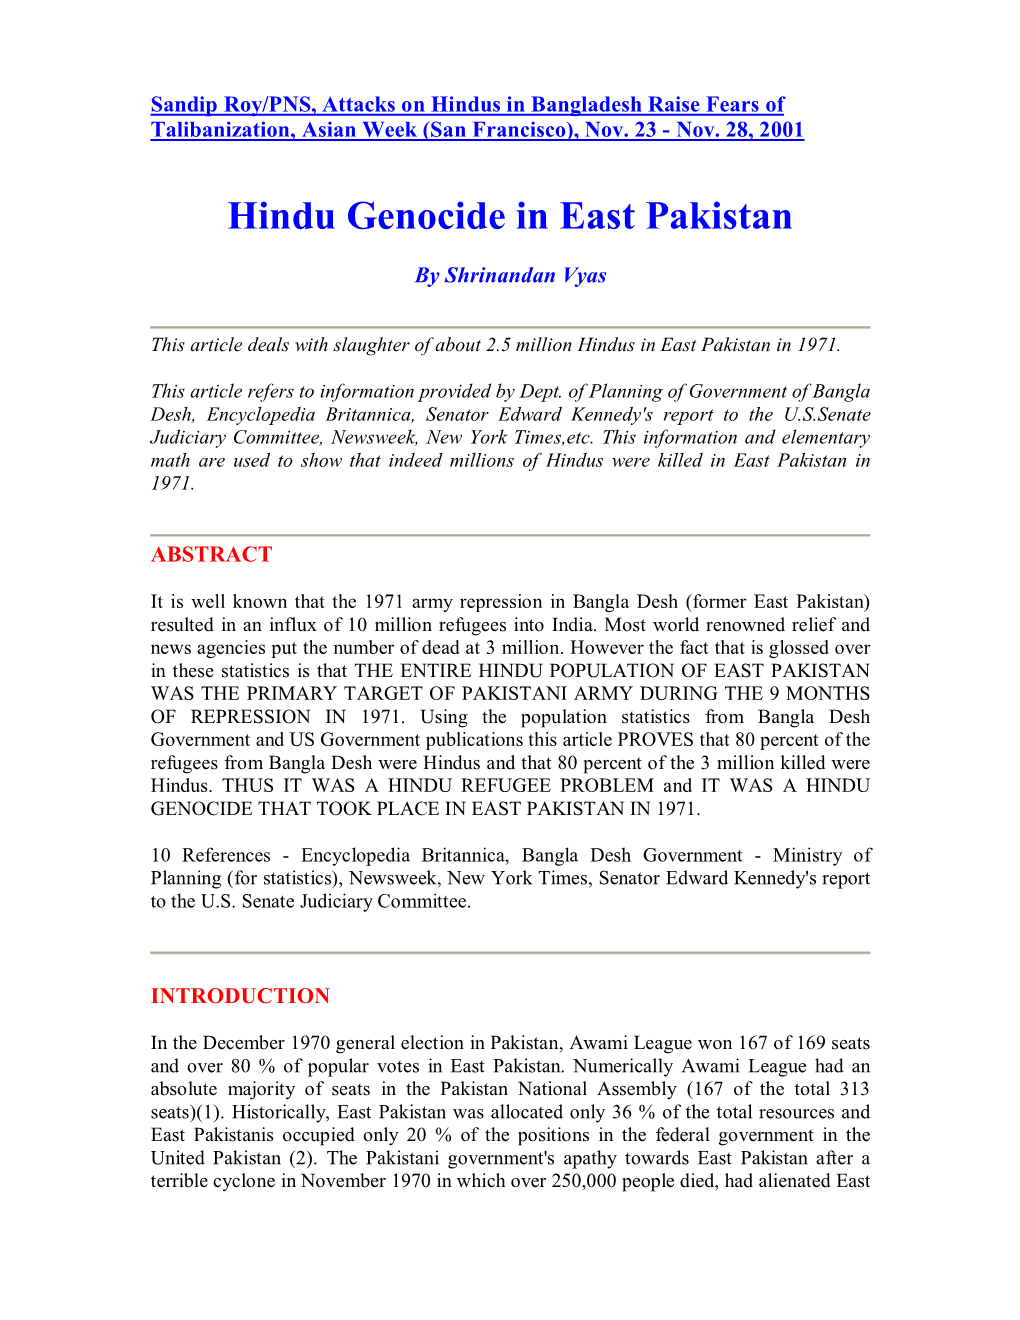 Hindu Genocide in East Pakistan